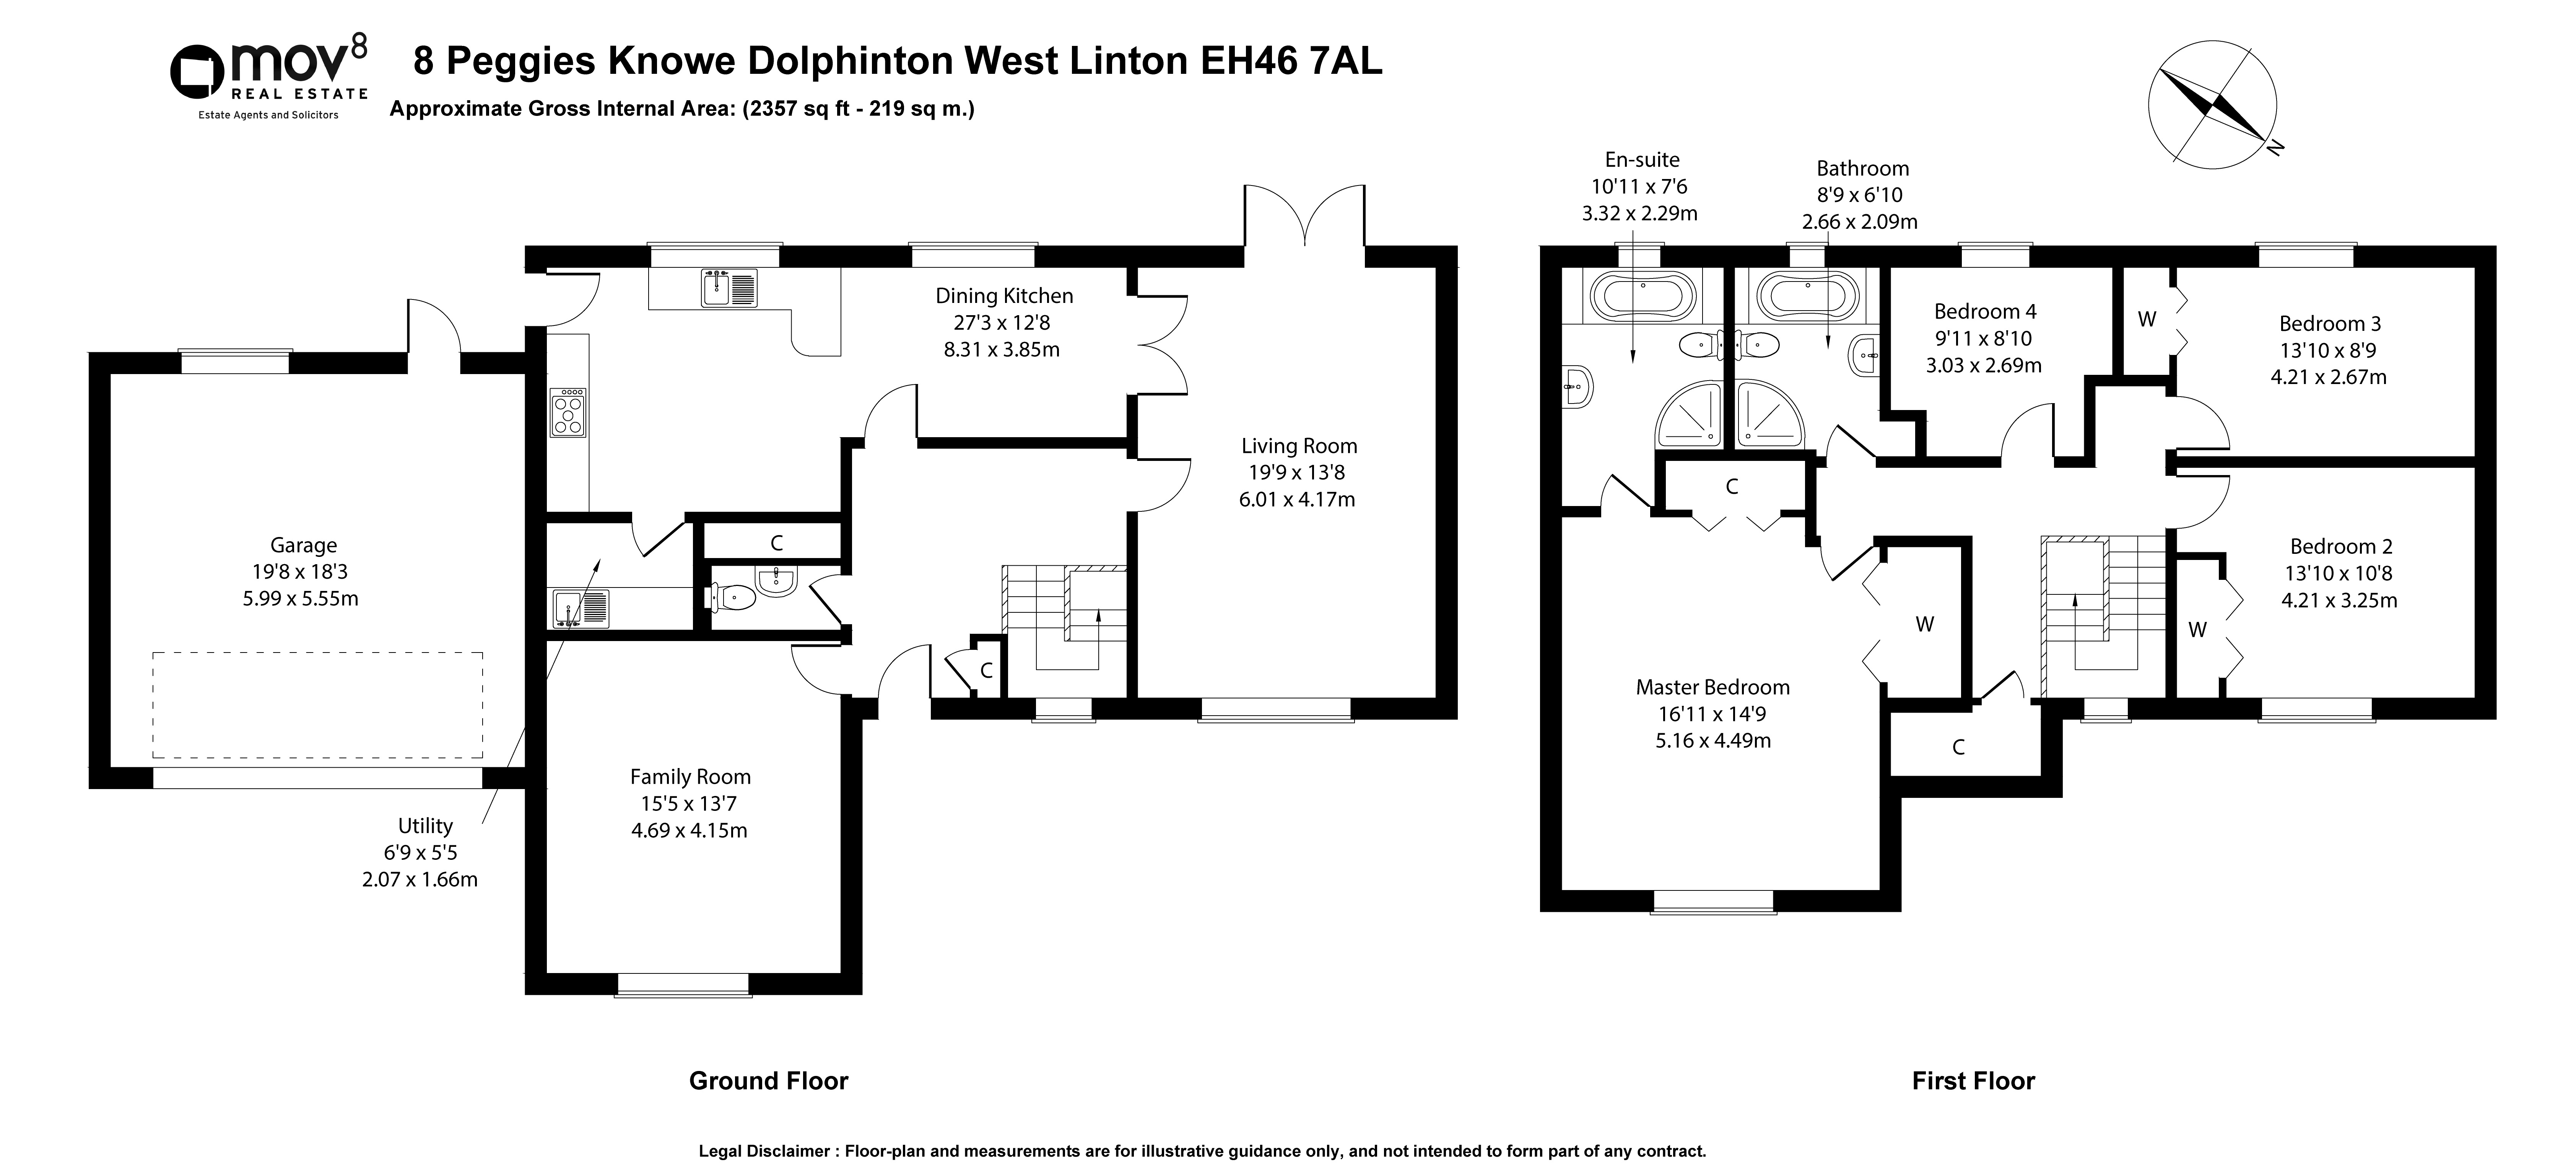 Floorplan 1 of 8 Peggies Knowe, Dolphinton, West Linton, South Lanarkshire, EH46 7AL